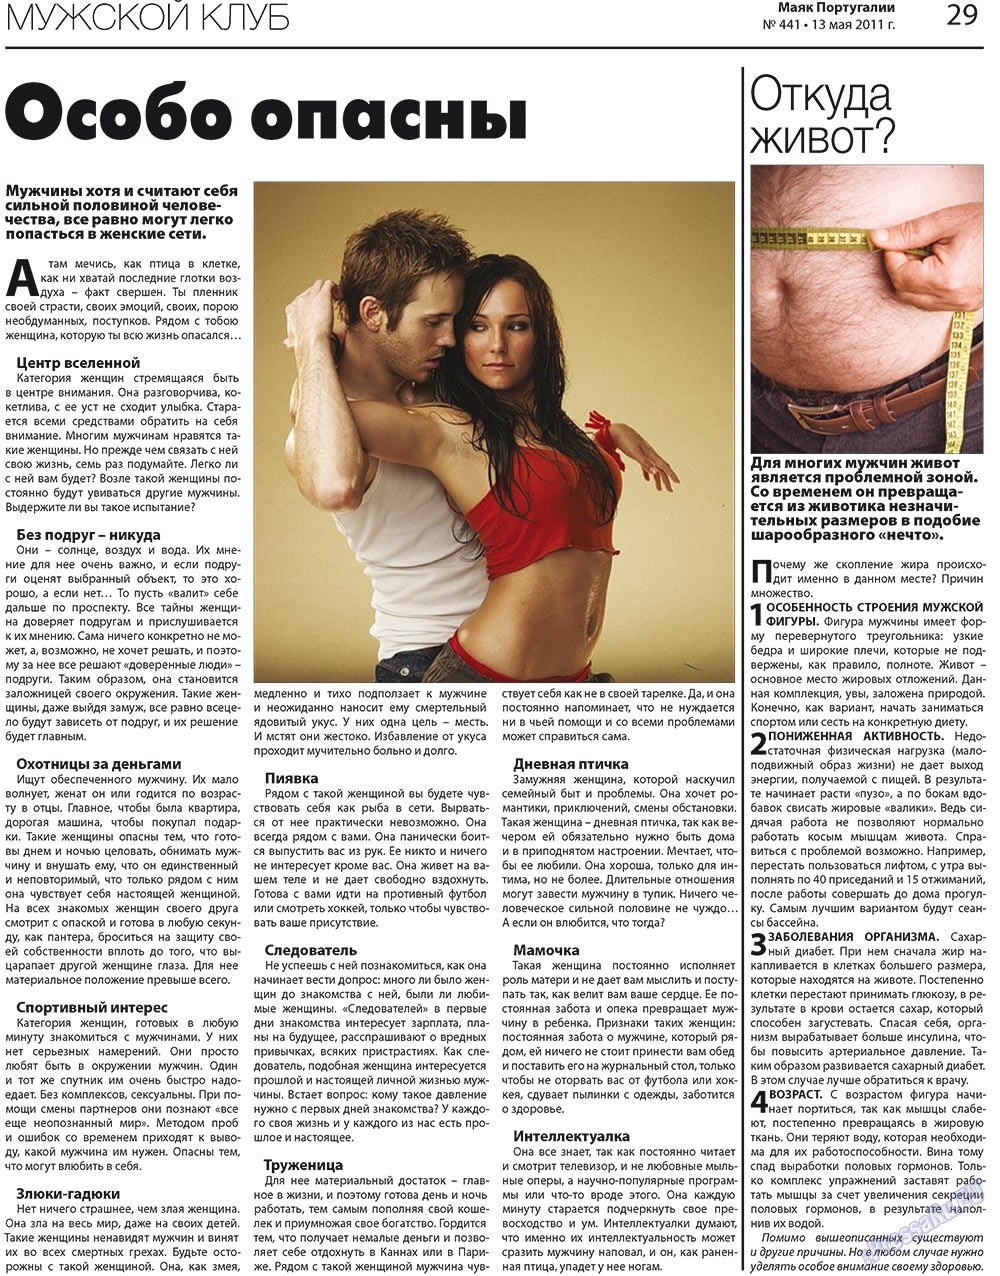 Маяк Португалии, газета. 2011 №441 стр.29